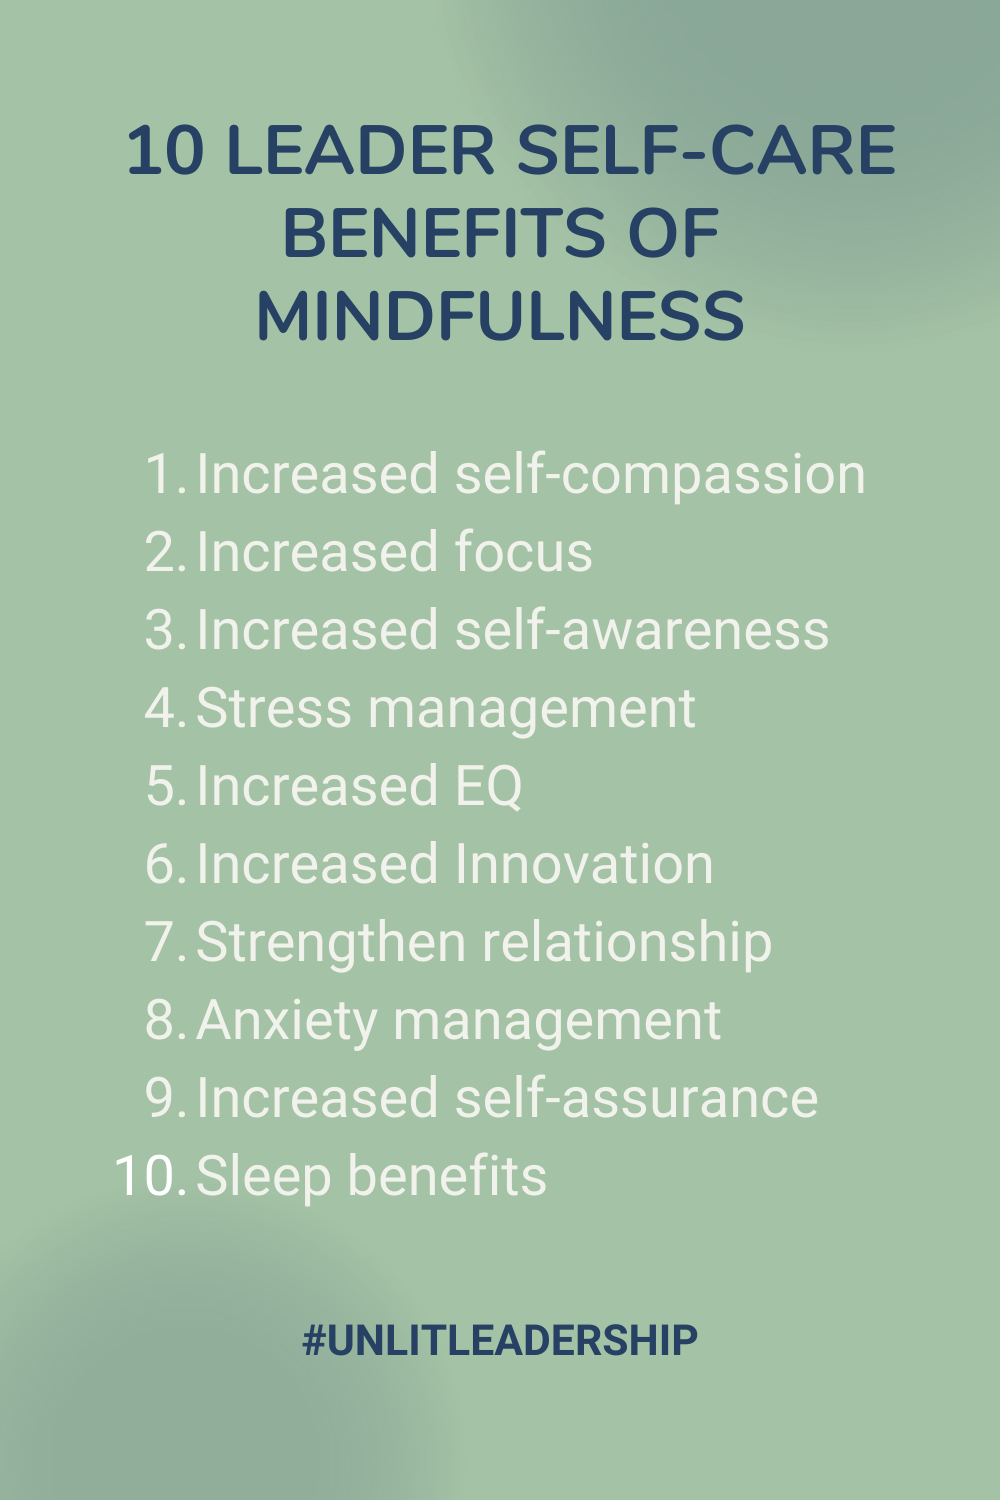 10 Leader self-care benefits of mindfulness pinterest post